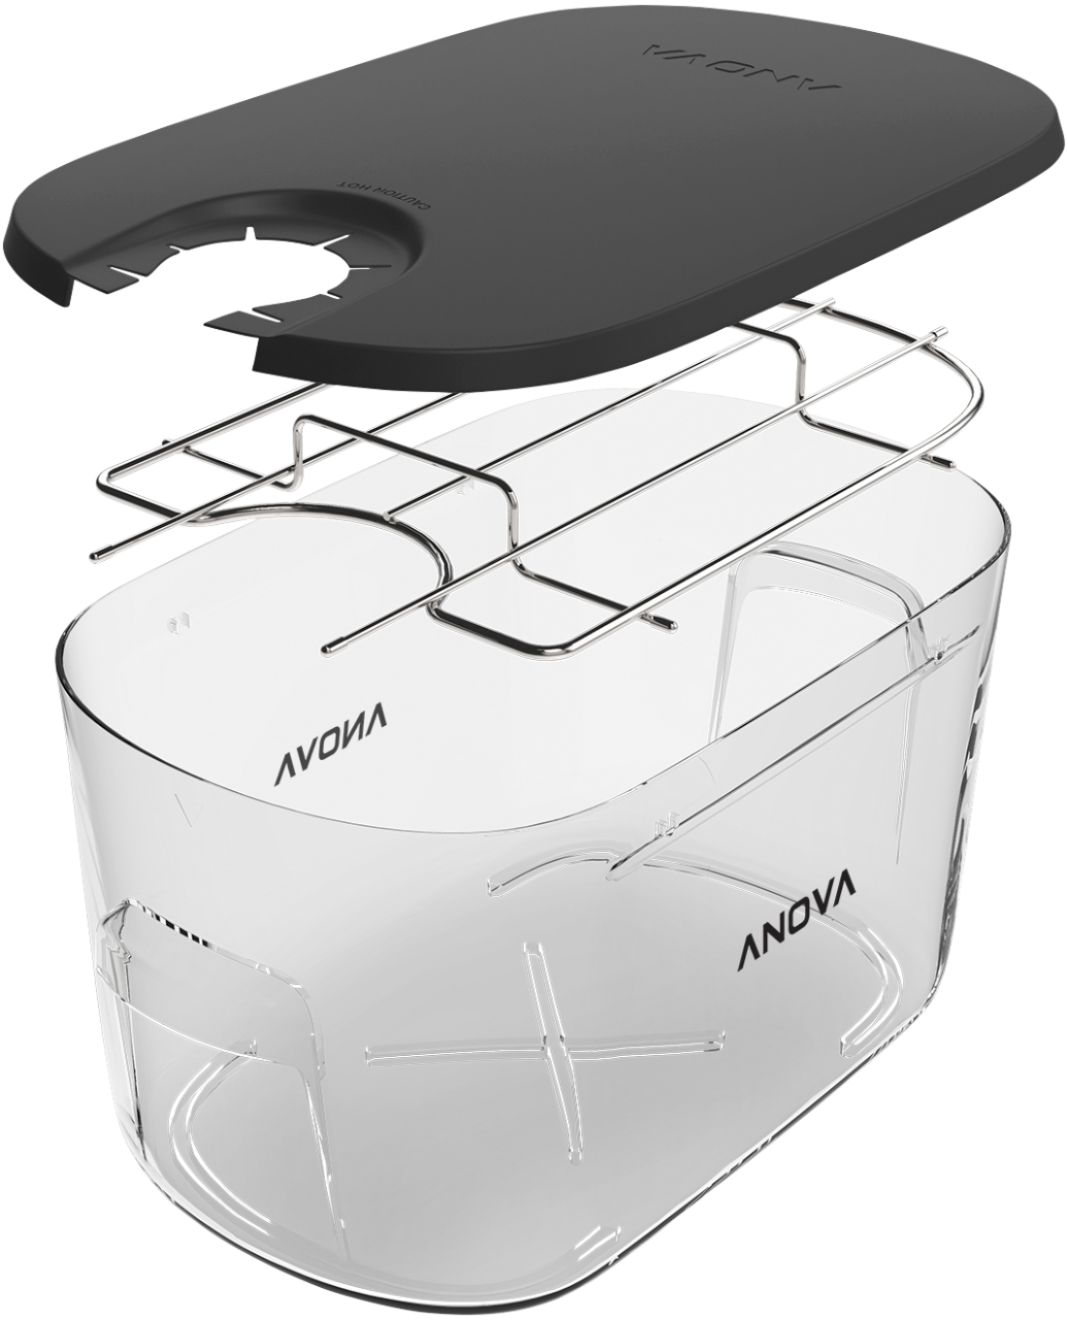 Angle View: Anova - Precision 12L Container - Clear